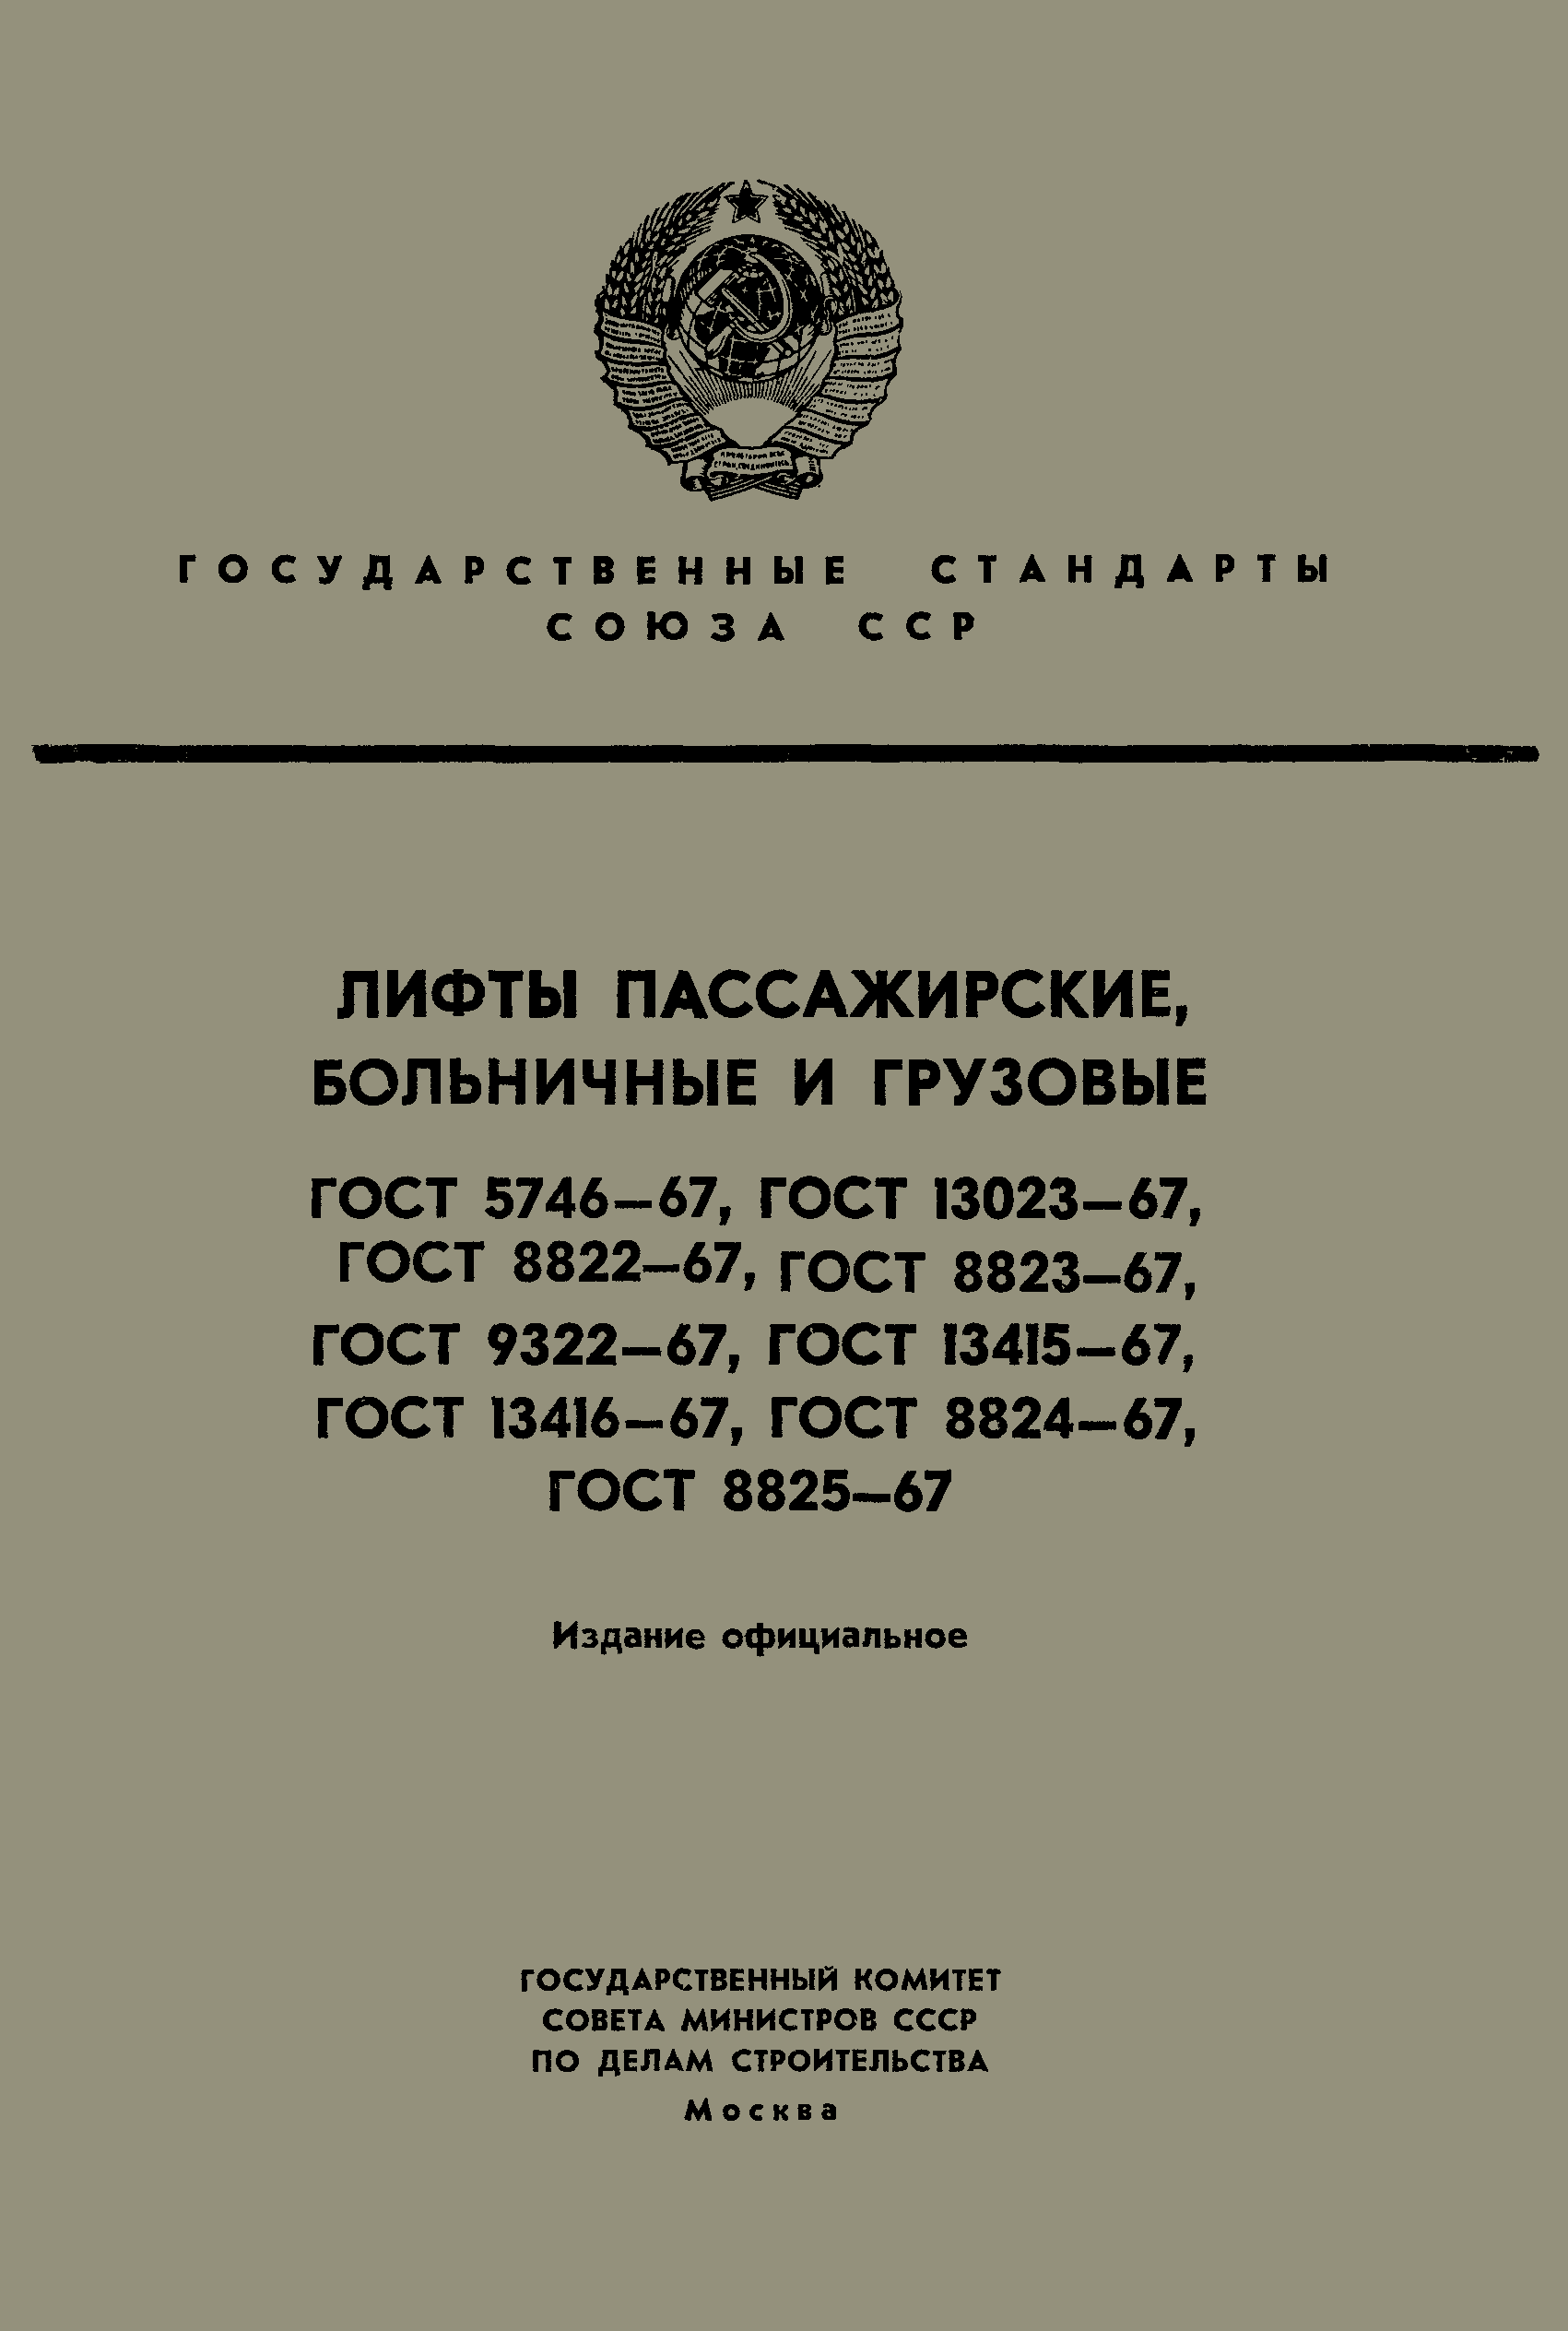 ГОСТ 13415-67